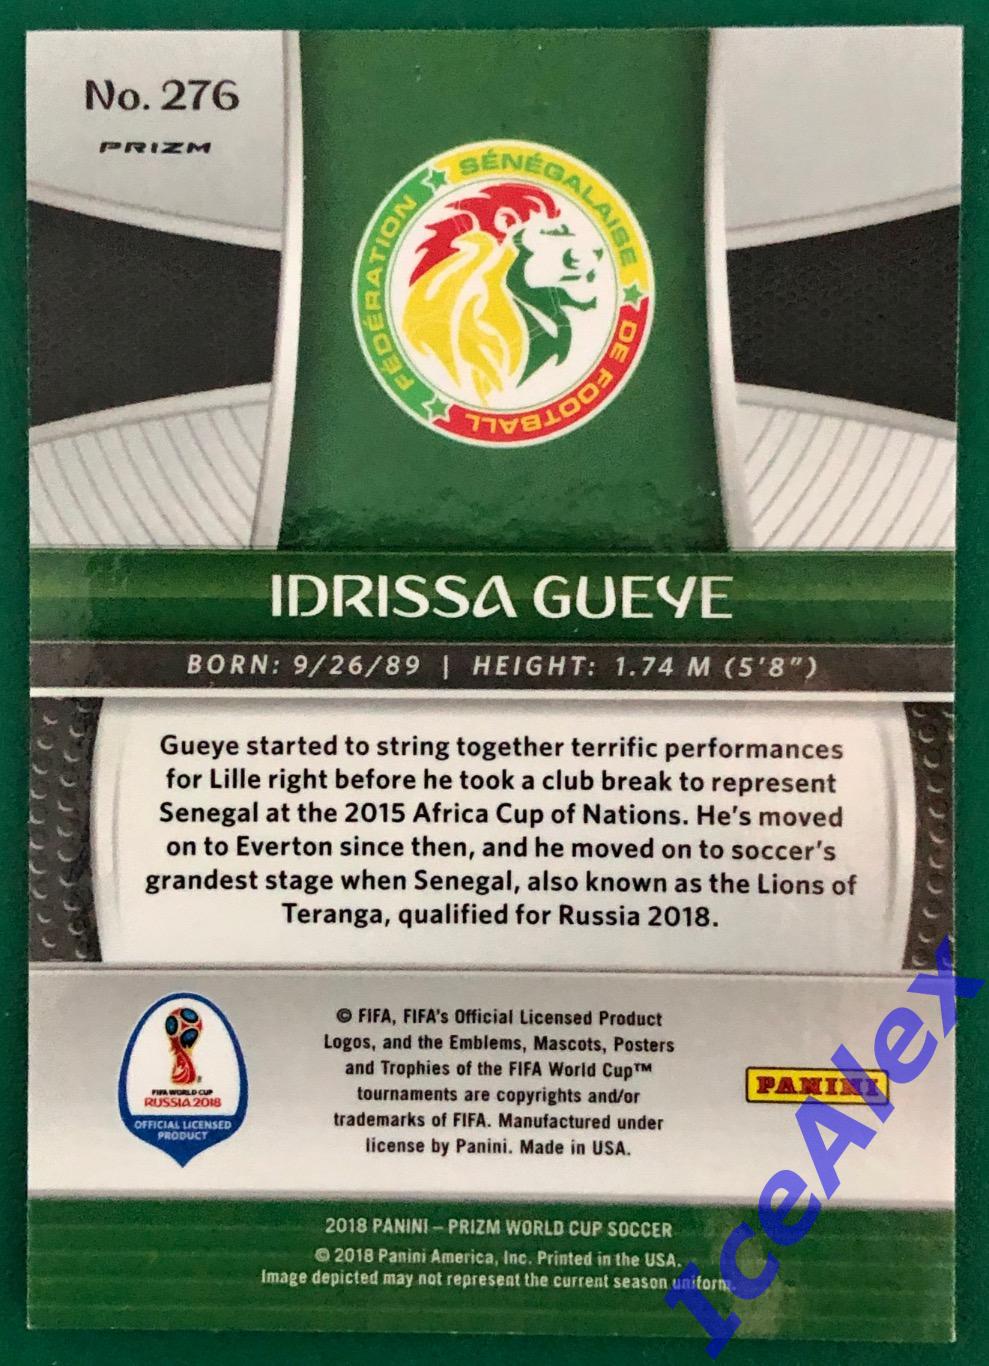 2018 Panini Prizm World Cup, #276RBW, Idrissa Gueye, Senegal 1